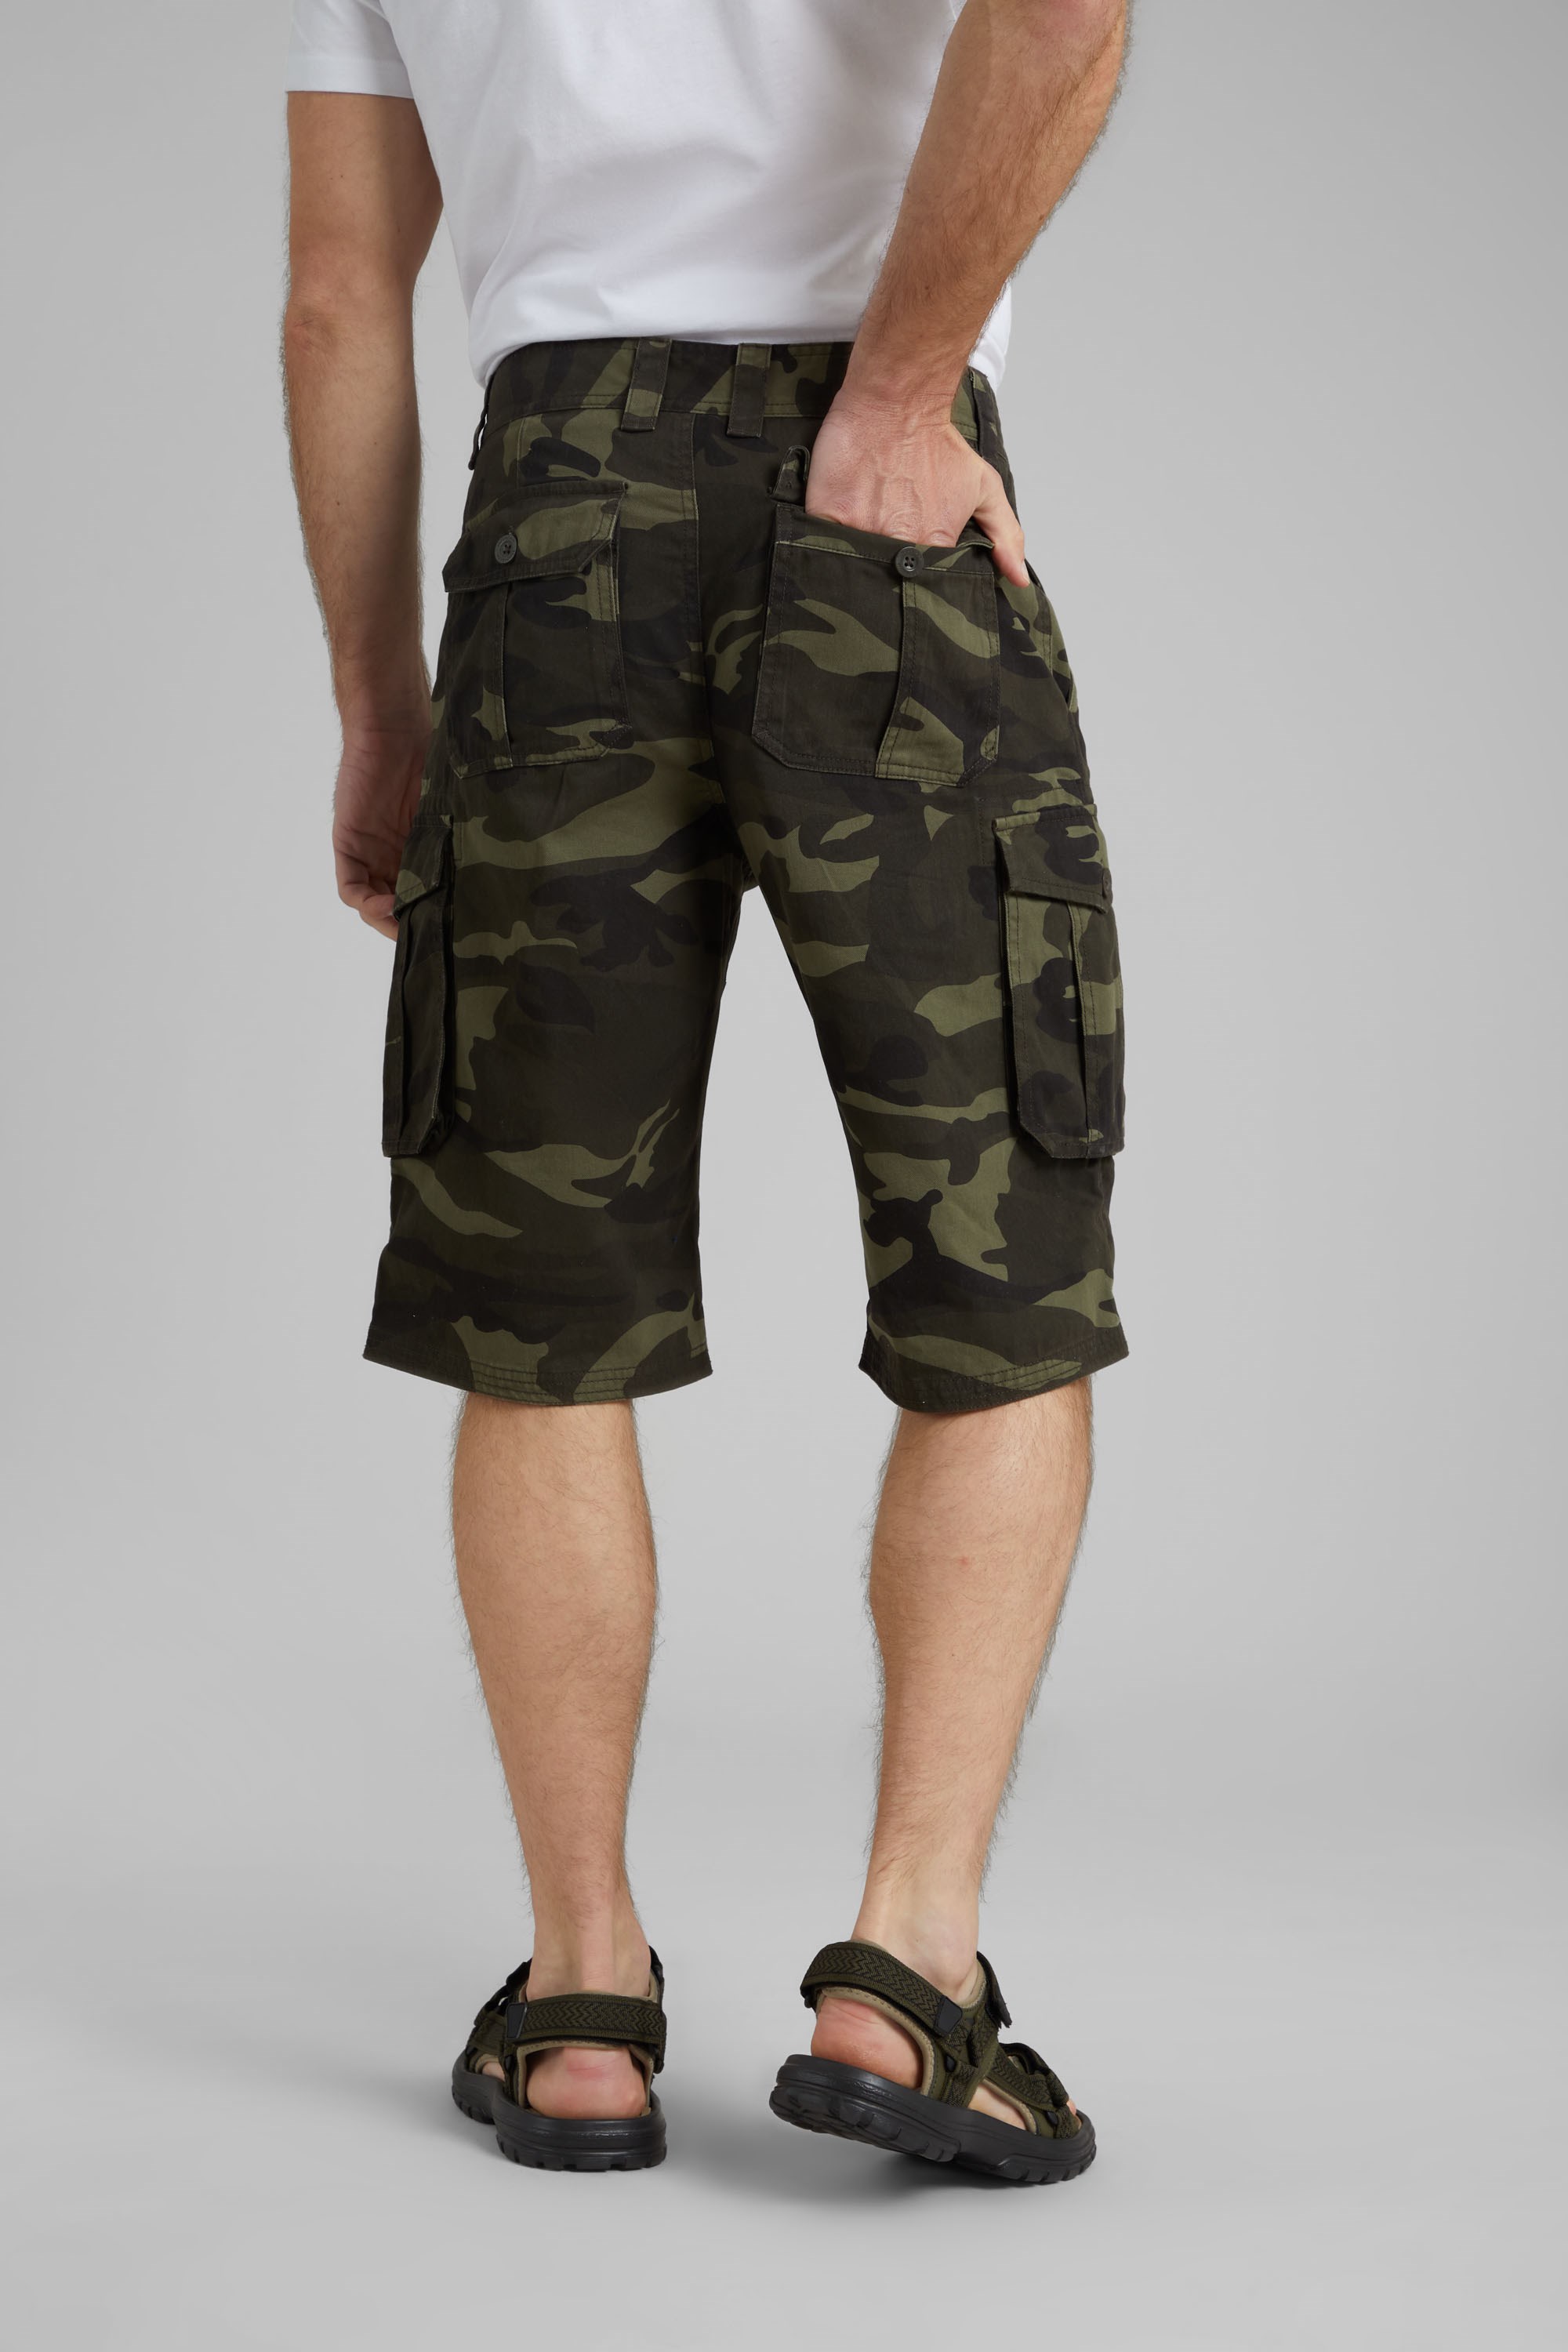 Mens Clothing Shorts Cargo shorts Black for Men Mountain Warehouse 100% Cotton Twill Short in Black Camo 